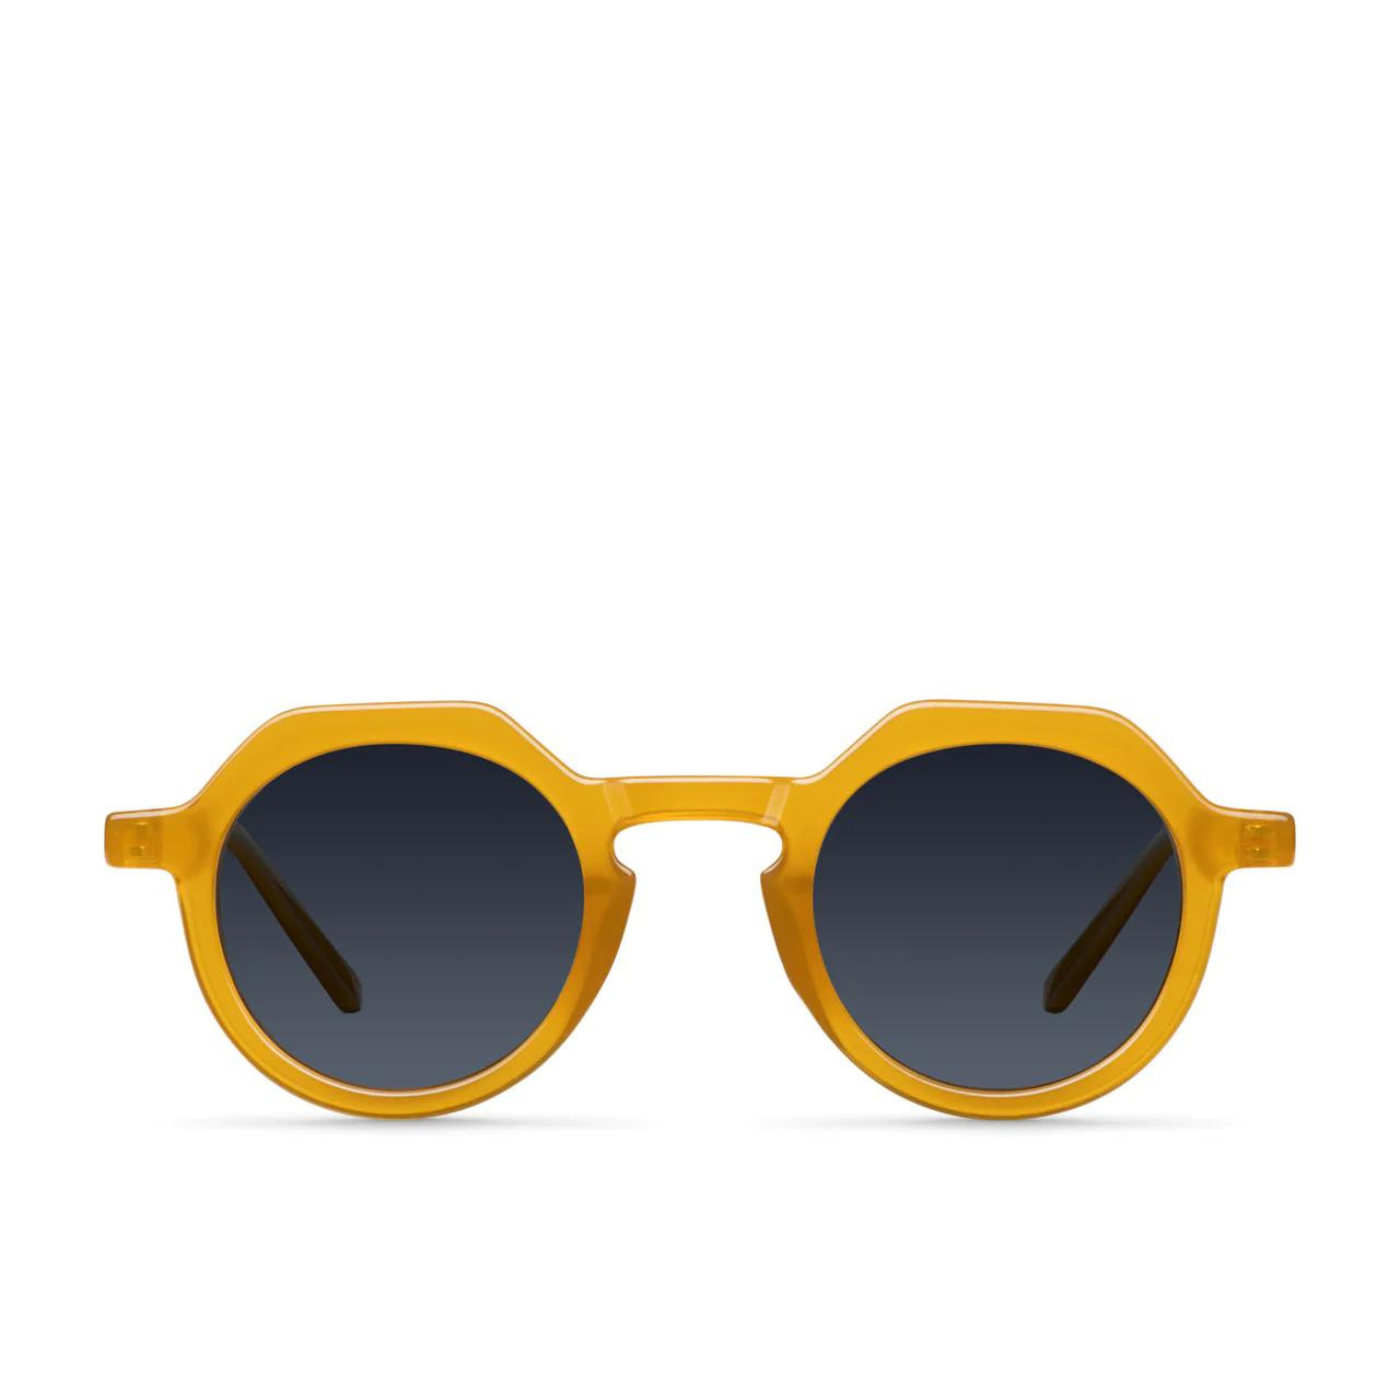 Hasan Amber Carbon Meller sunglasses